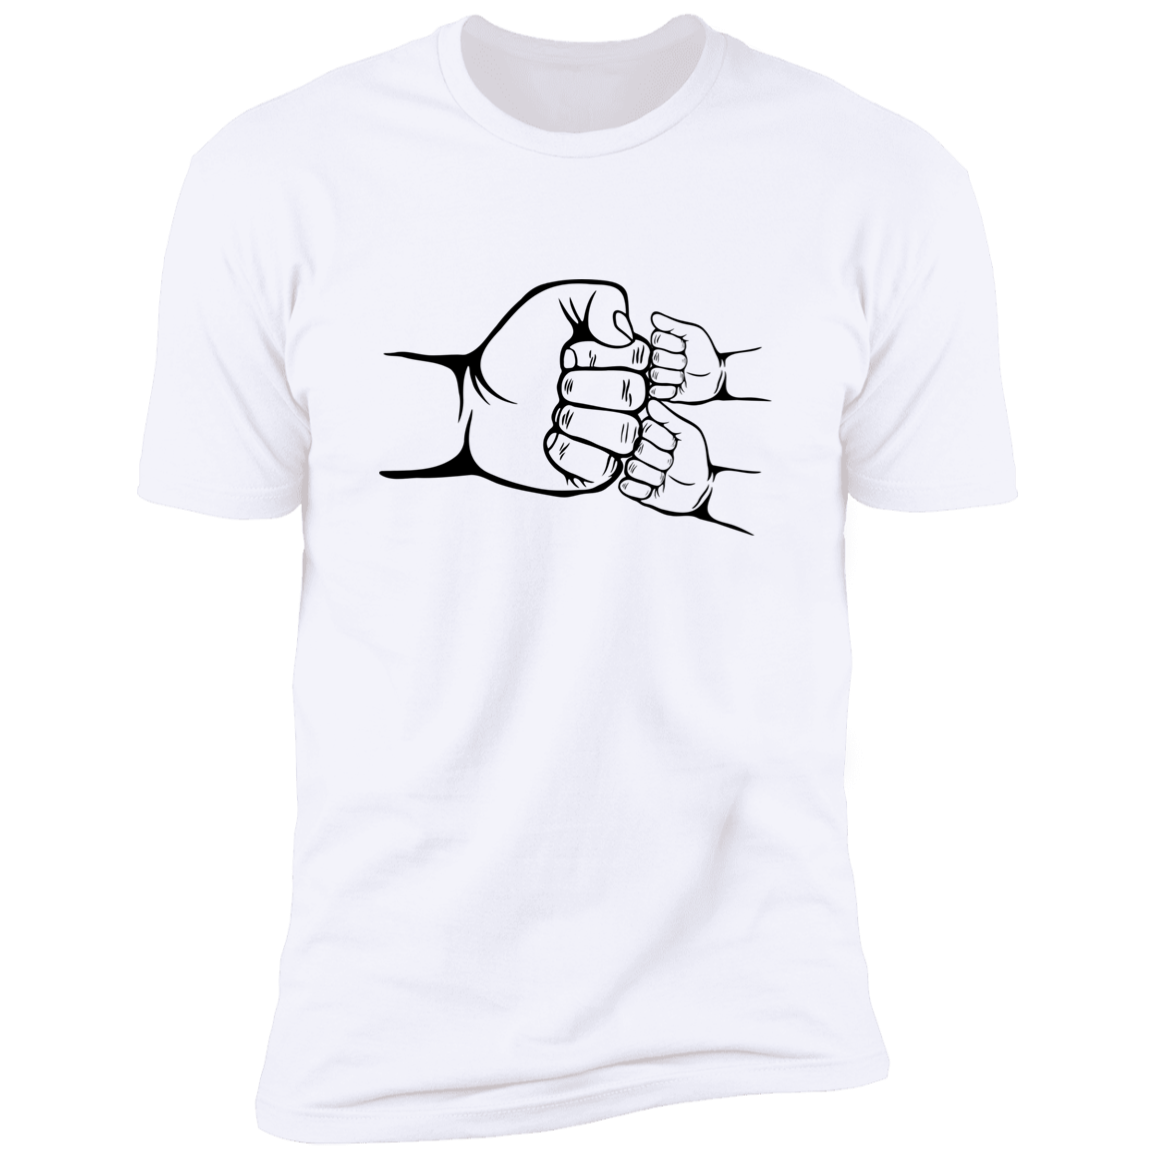 White Shirt Short Sleeve - 3 Fist Bump